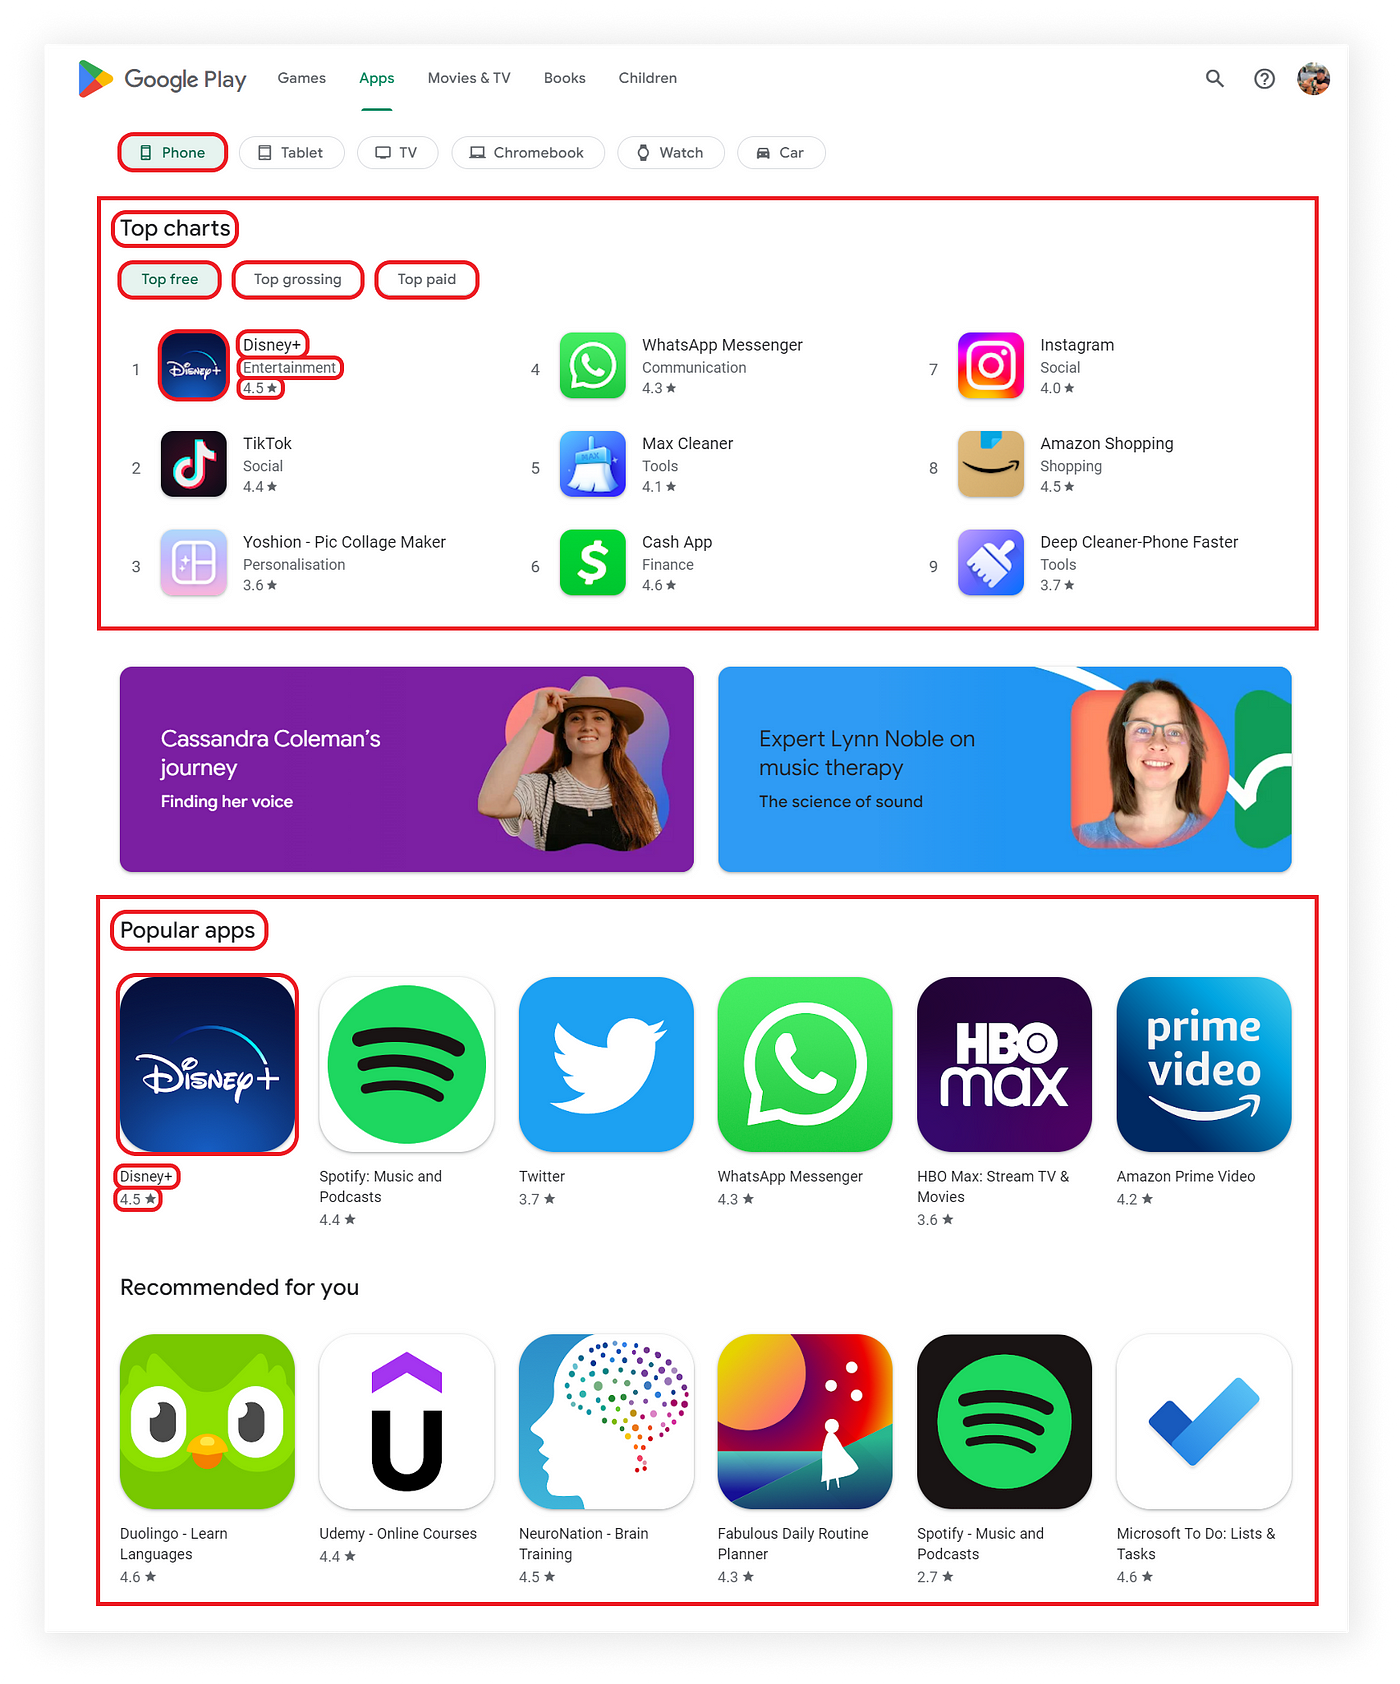 Simple Sandbox 2 - Apps on Google Play